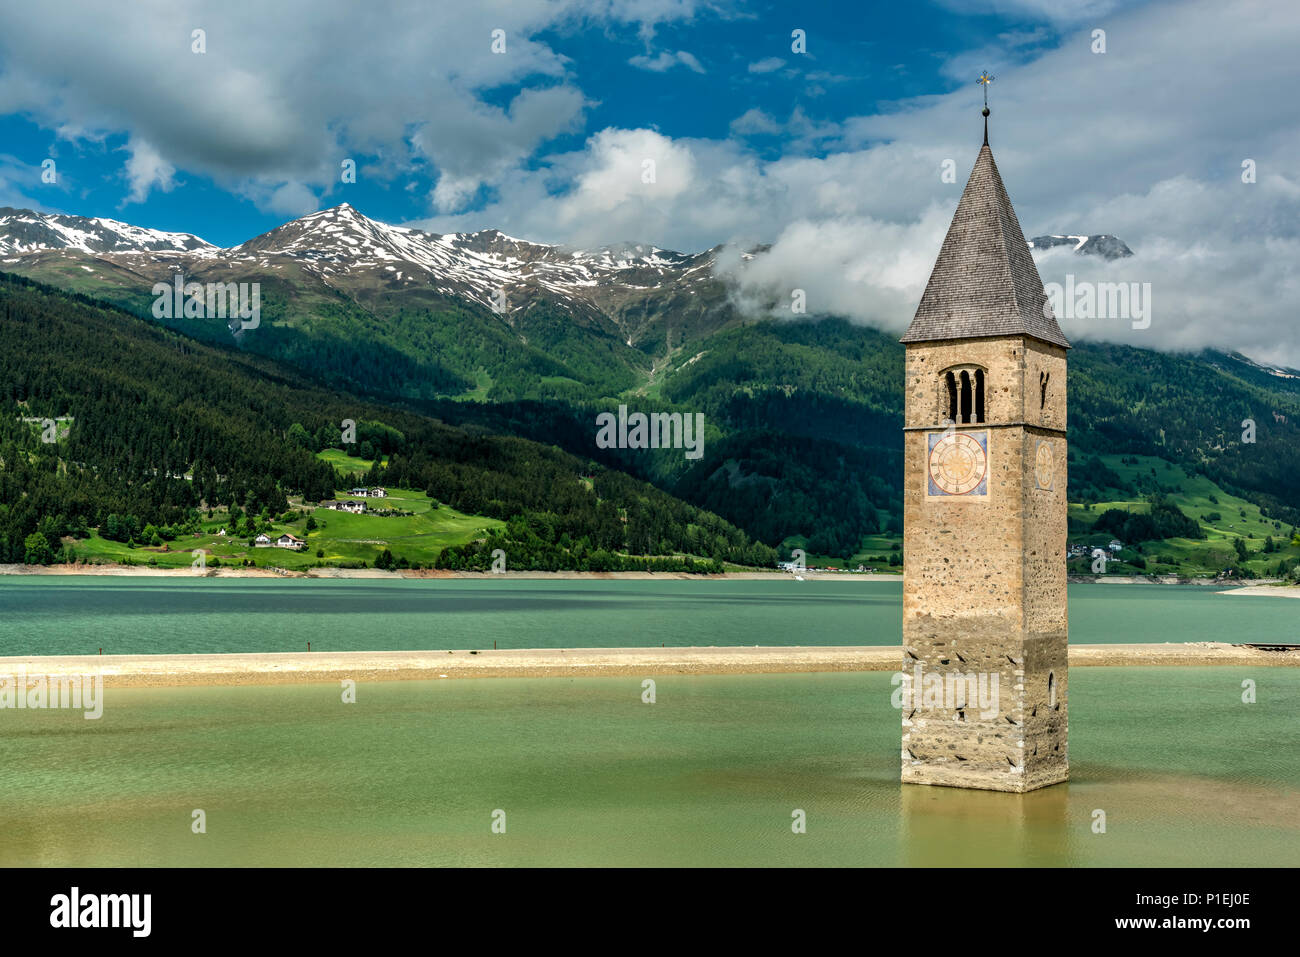 The half submerged bell tower of  Curon Venosta - Graun im Vinschgau, Trentino Alto Adige - South Tyrol, Italy Stock Photo